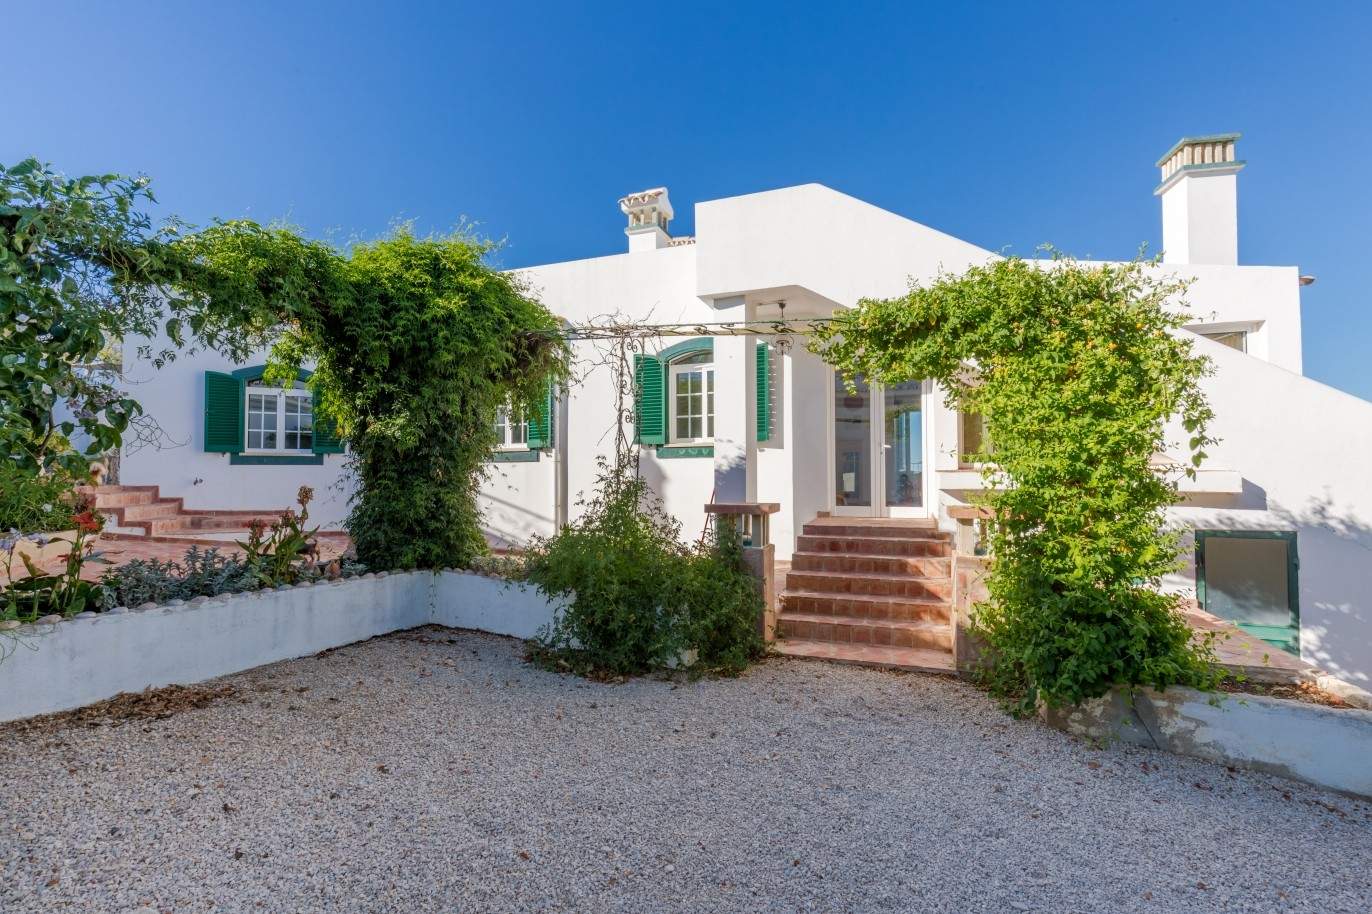 Freistehende villa zum Verkauf, Land Blick, Loulé, Algarve, Portugal_67632